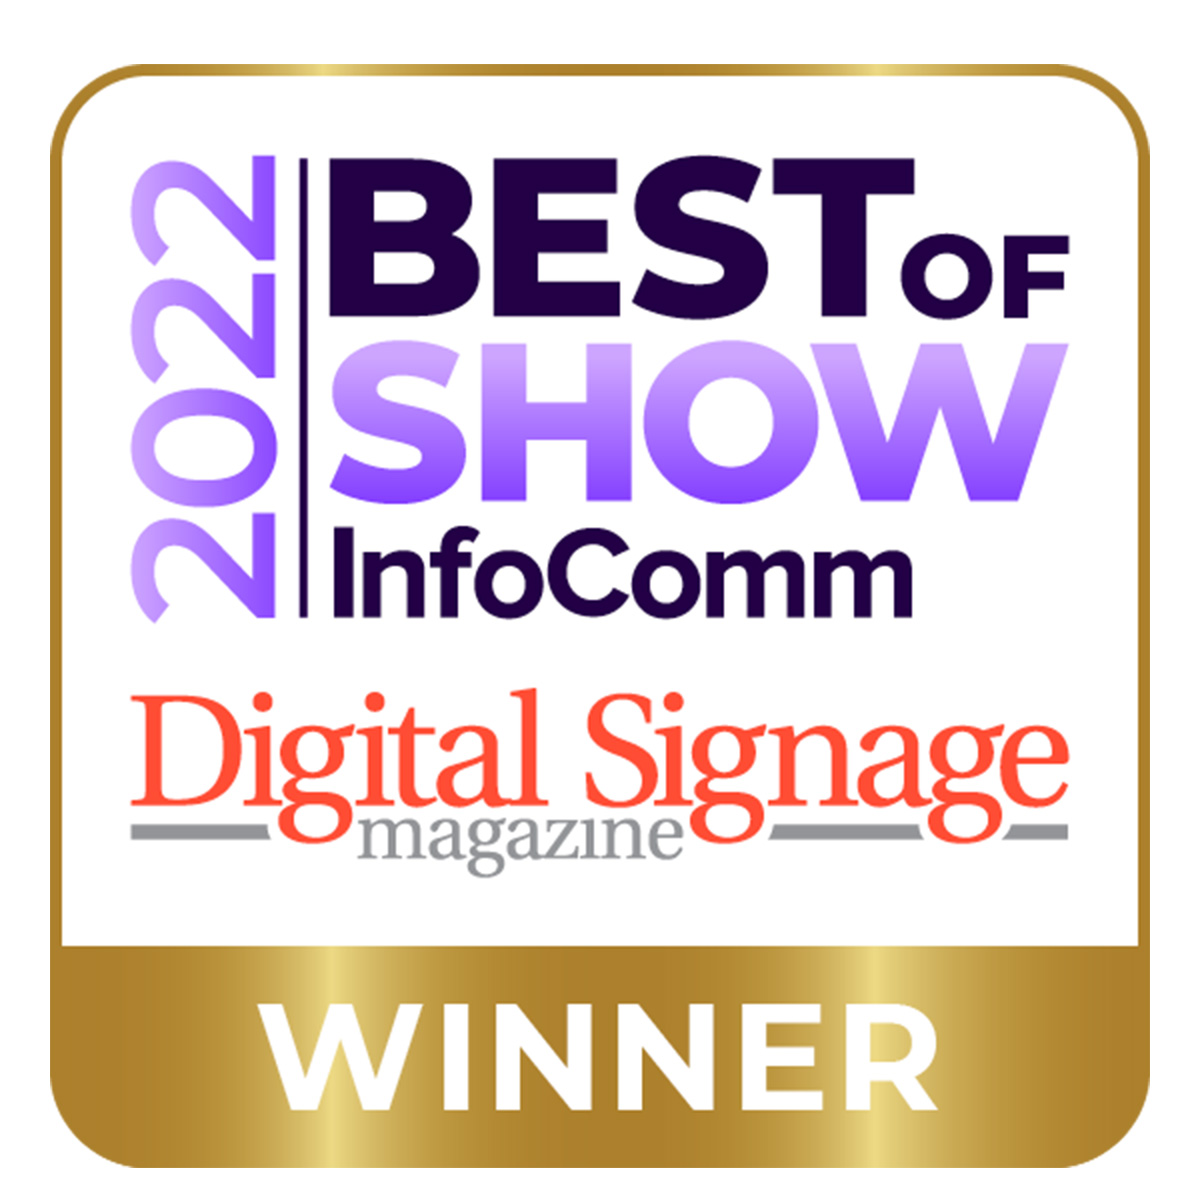 Digital Signage “Best of Show” at InfoComm